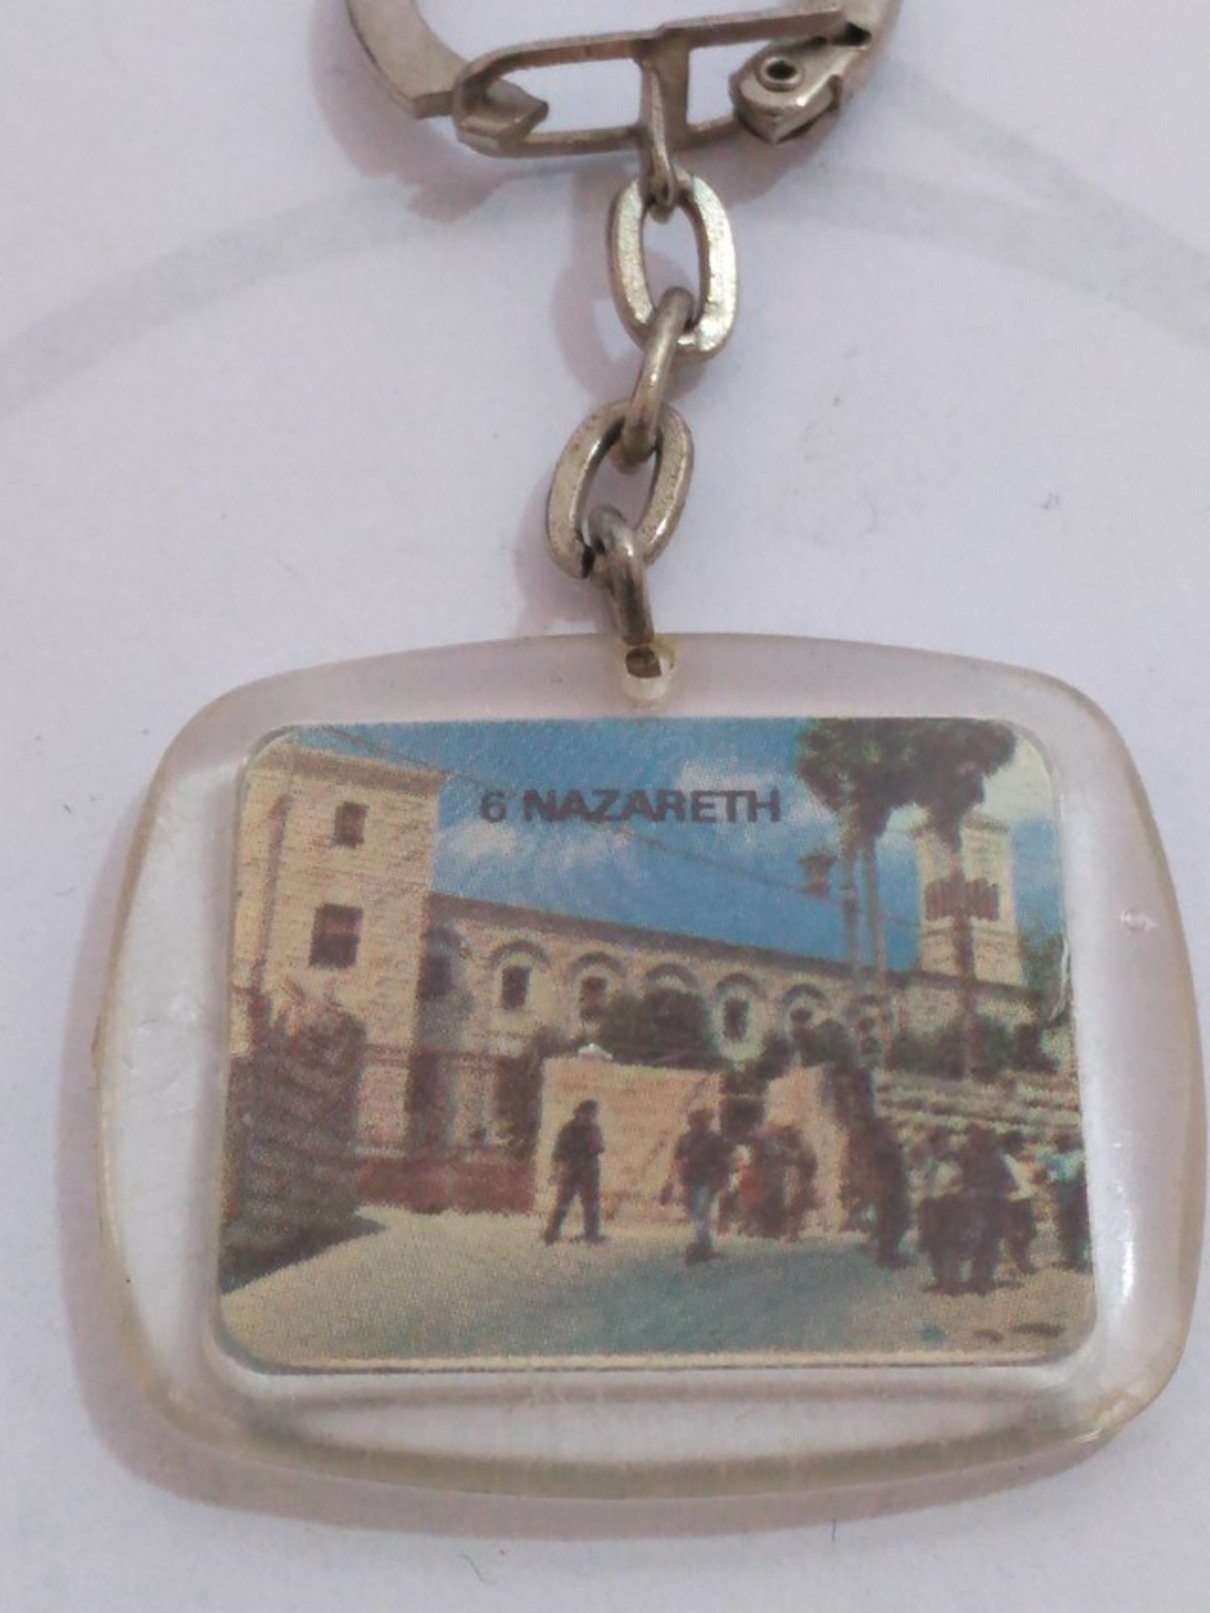 Porte Clés Bas El Al Collection 7 Merveilles D'Israel * 6 Nazareth Ancien Porte Cléfs - Portachiavi